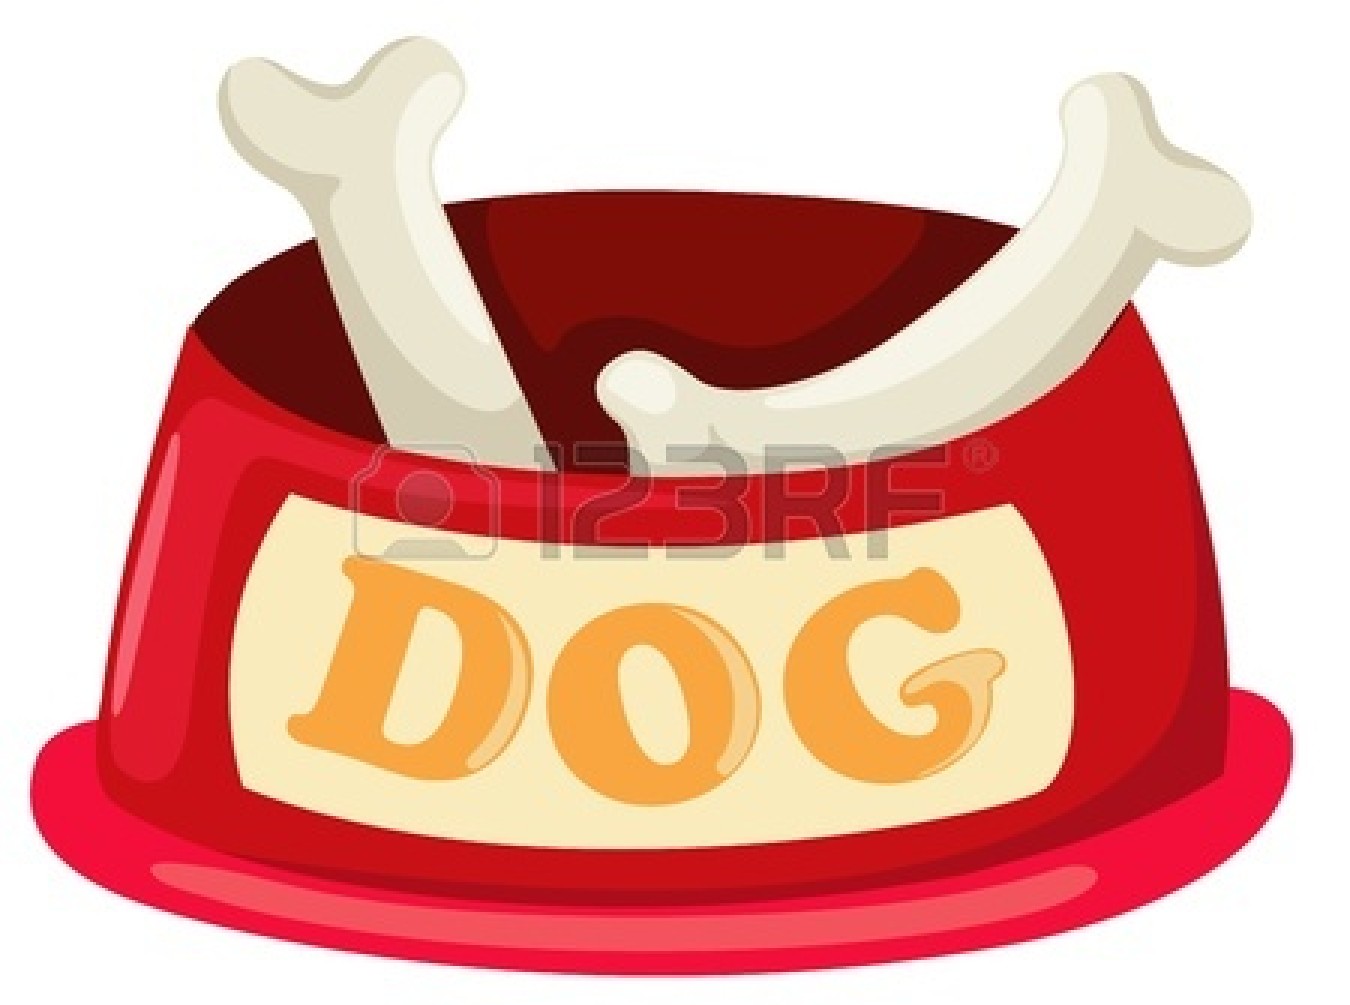 Dog Food Bowl Coloring Page P